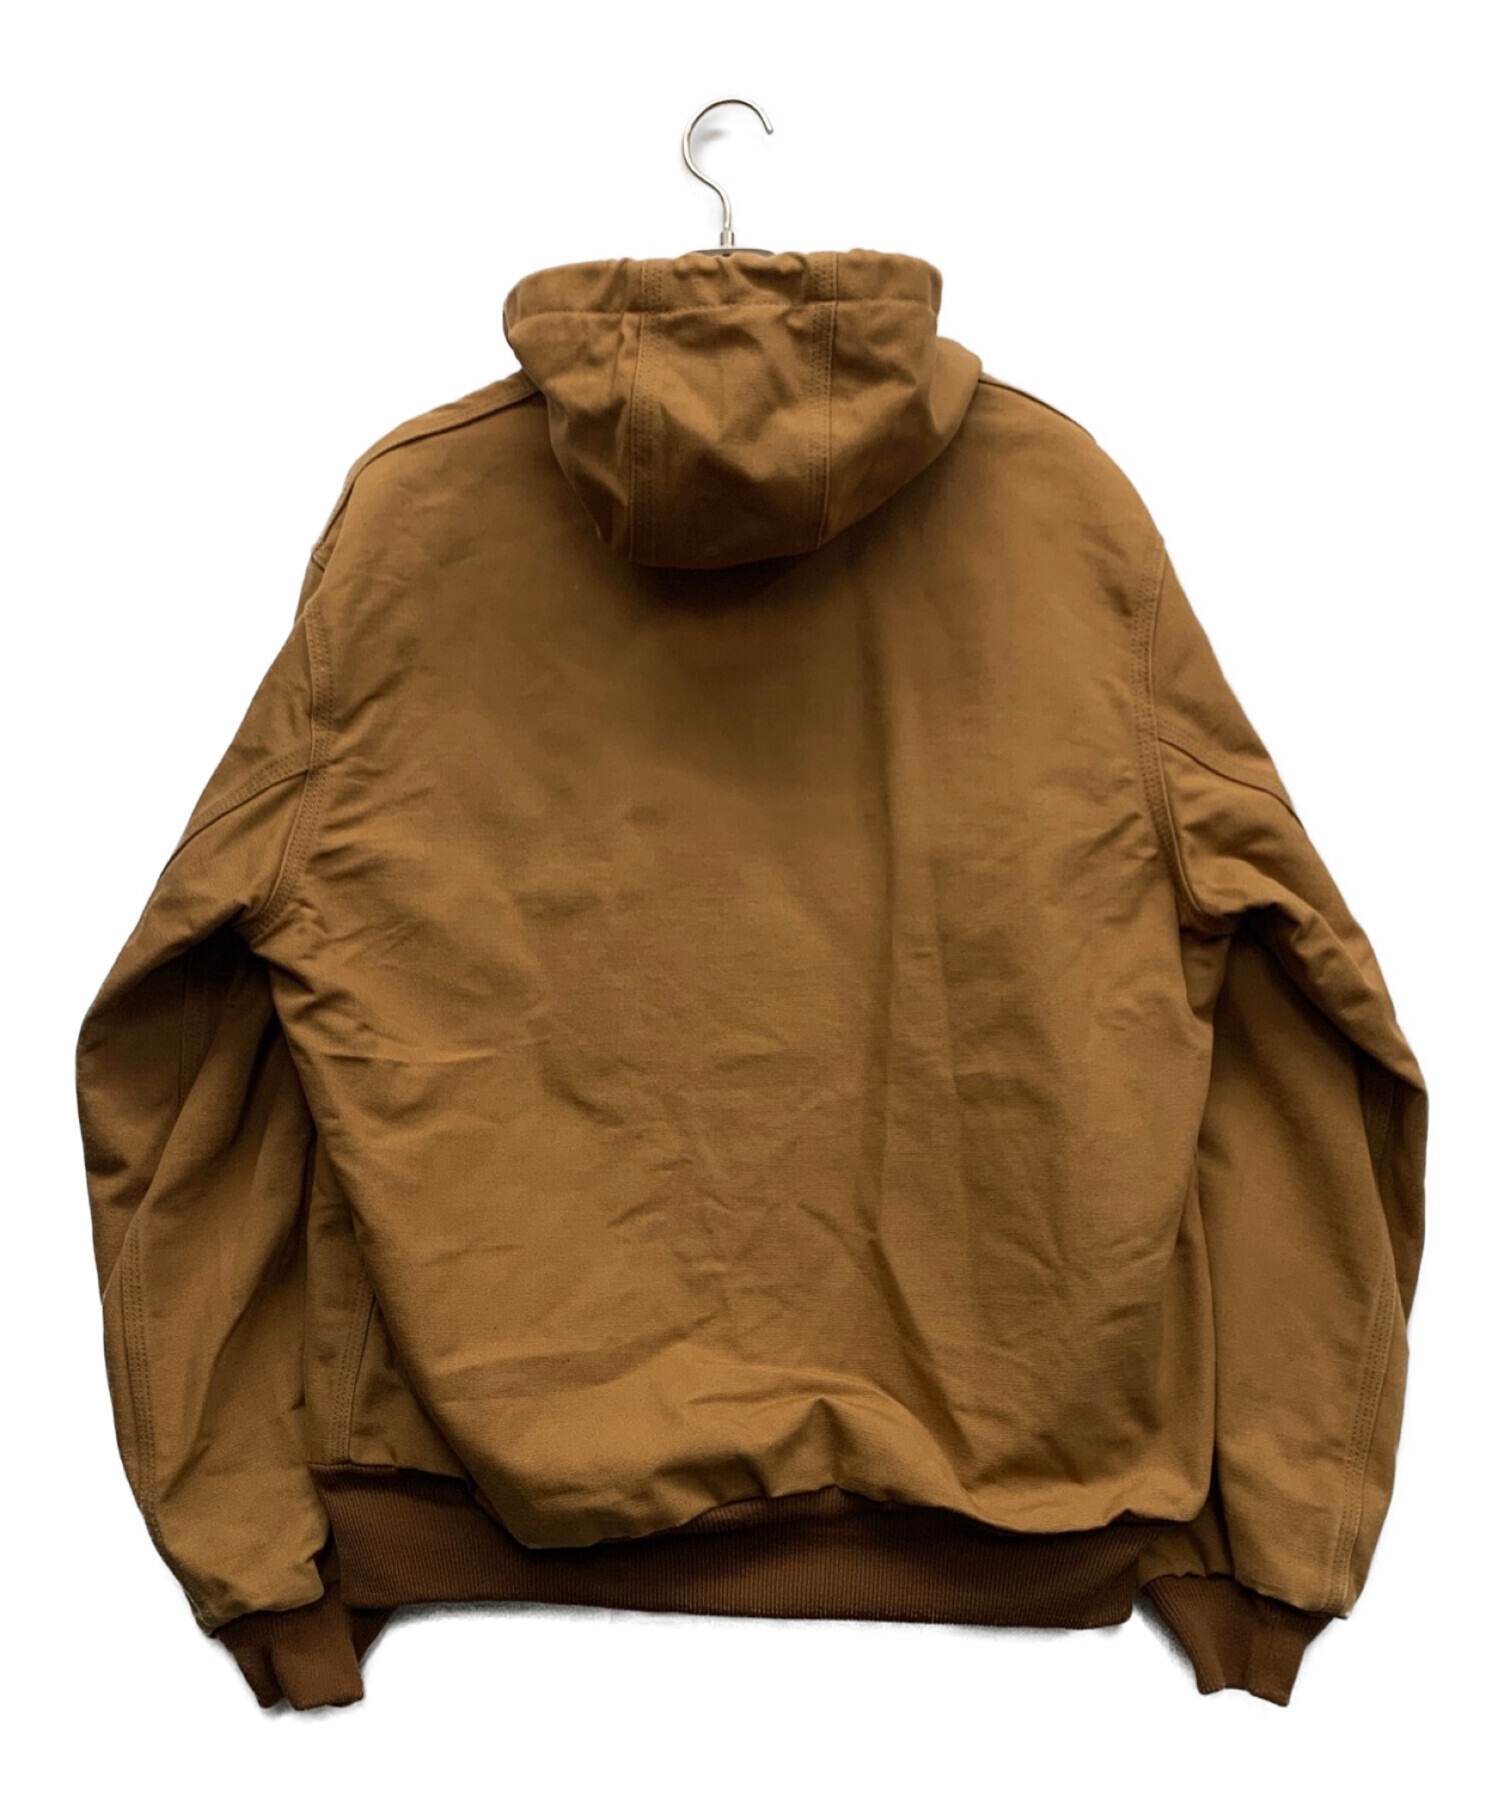 Carharrt brown mens jacket Size M